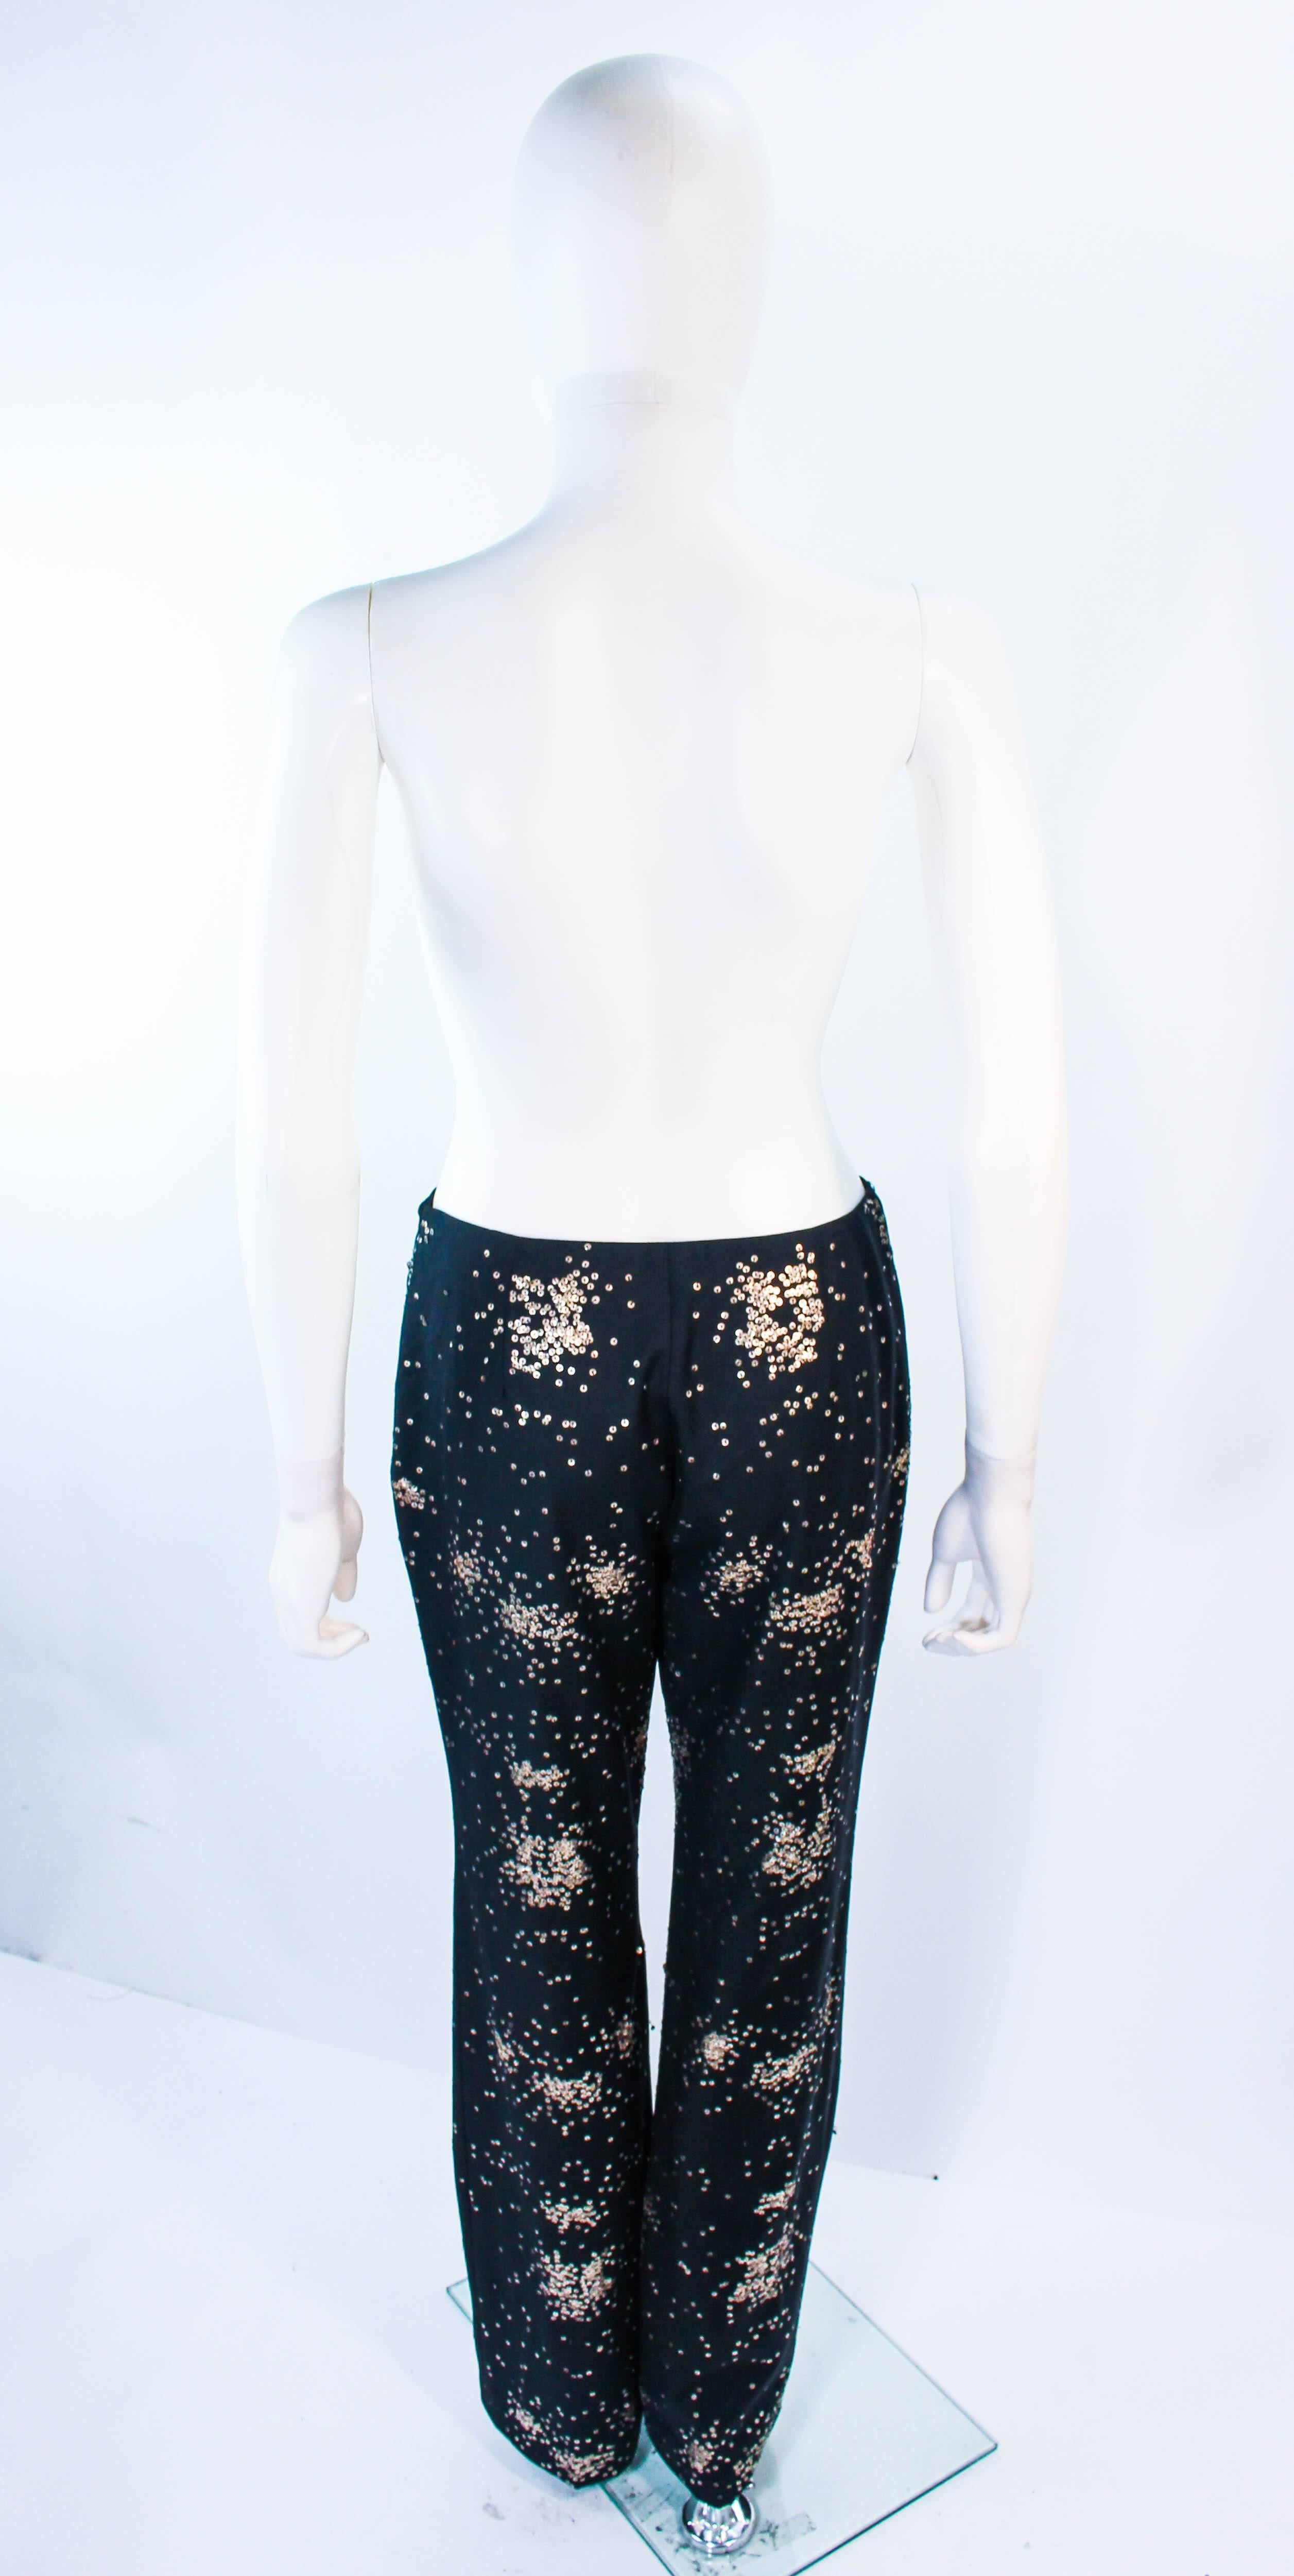 OZBEK Ultra Black Pants with Metal Sequin Applique Size 4 6 4